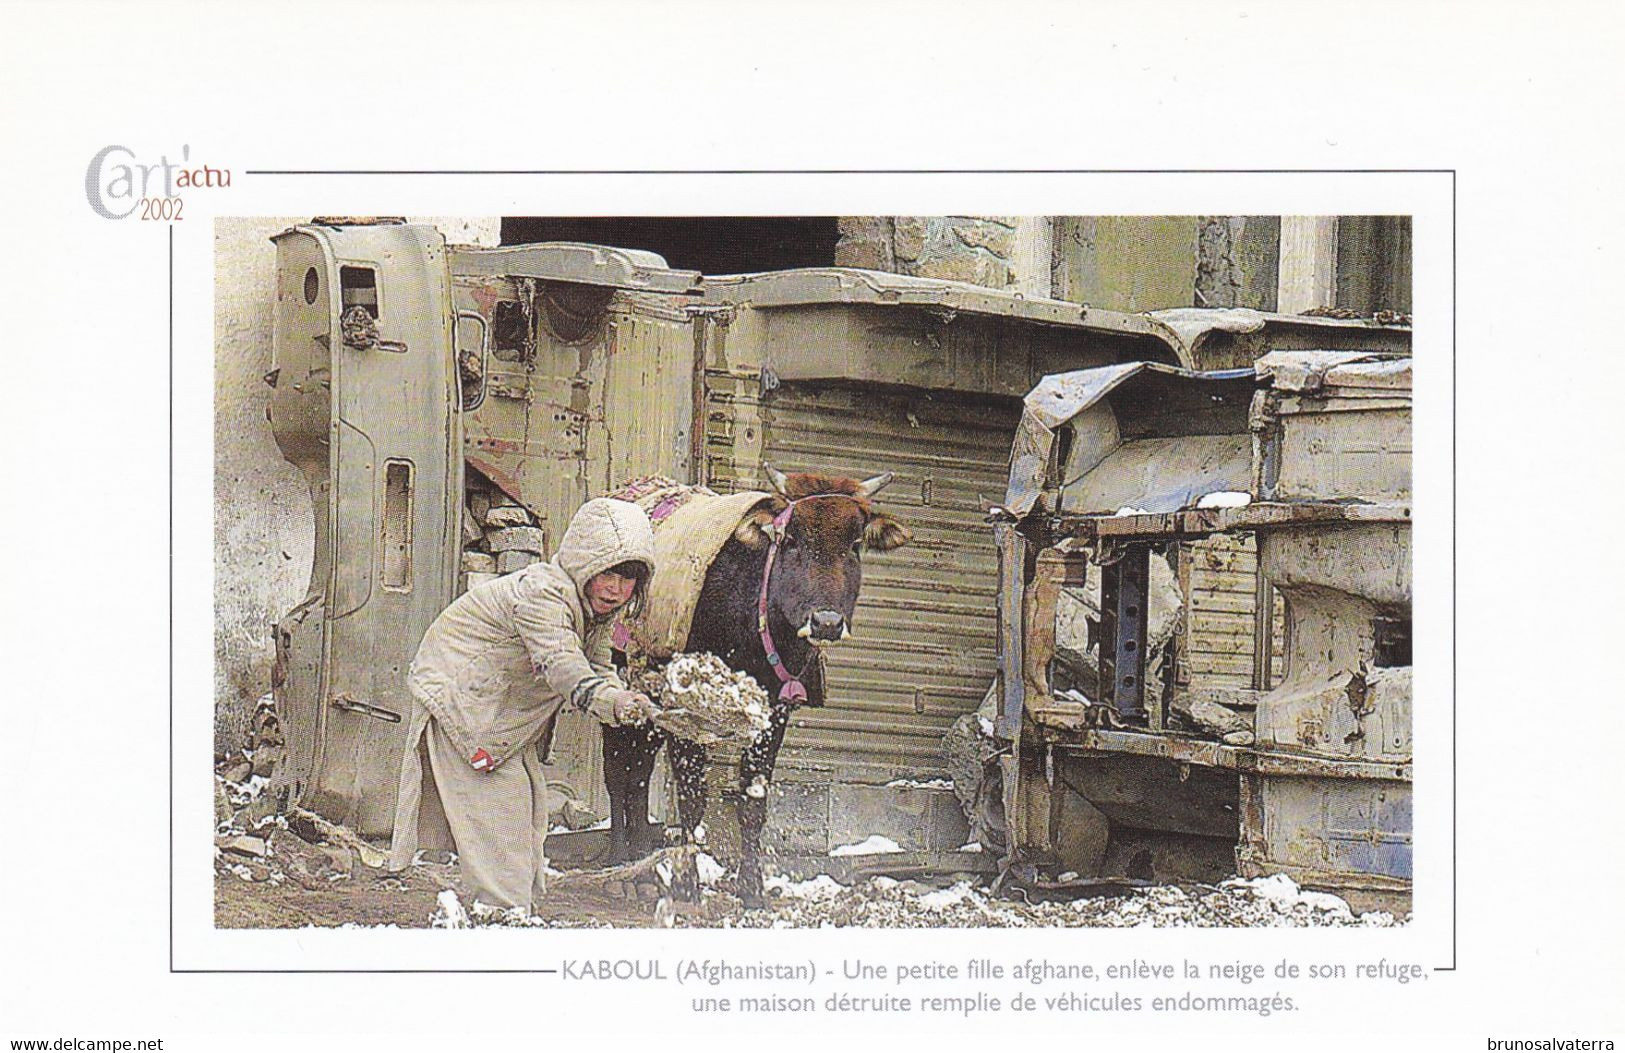 KABOUL - Une Petite Fille Afghane Enlève La Neige De Son Refuge... - Cart'actu 2002 N° 101 - Photo Jewel Samad - Afghanistan